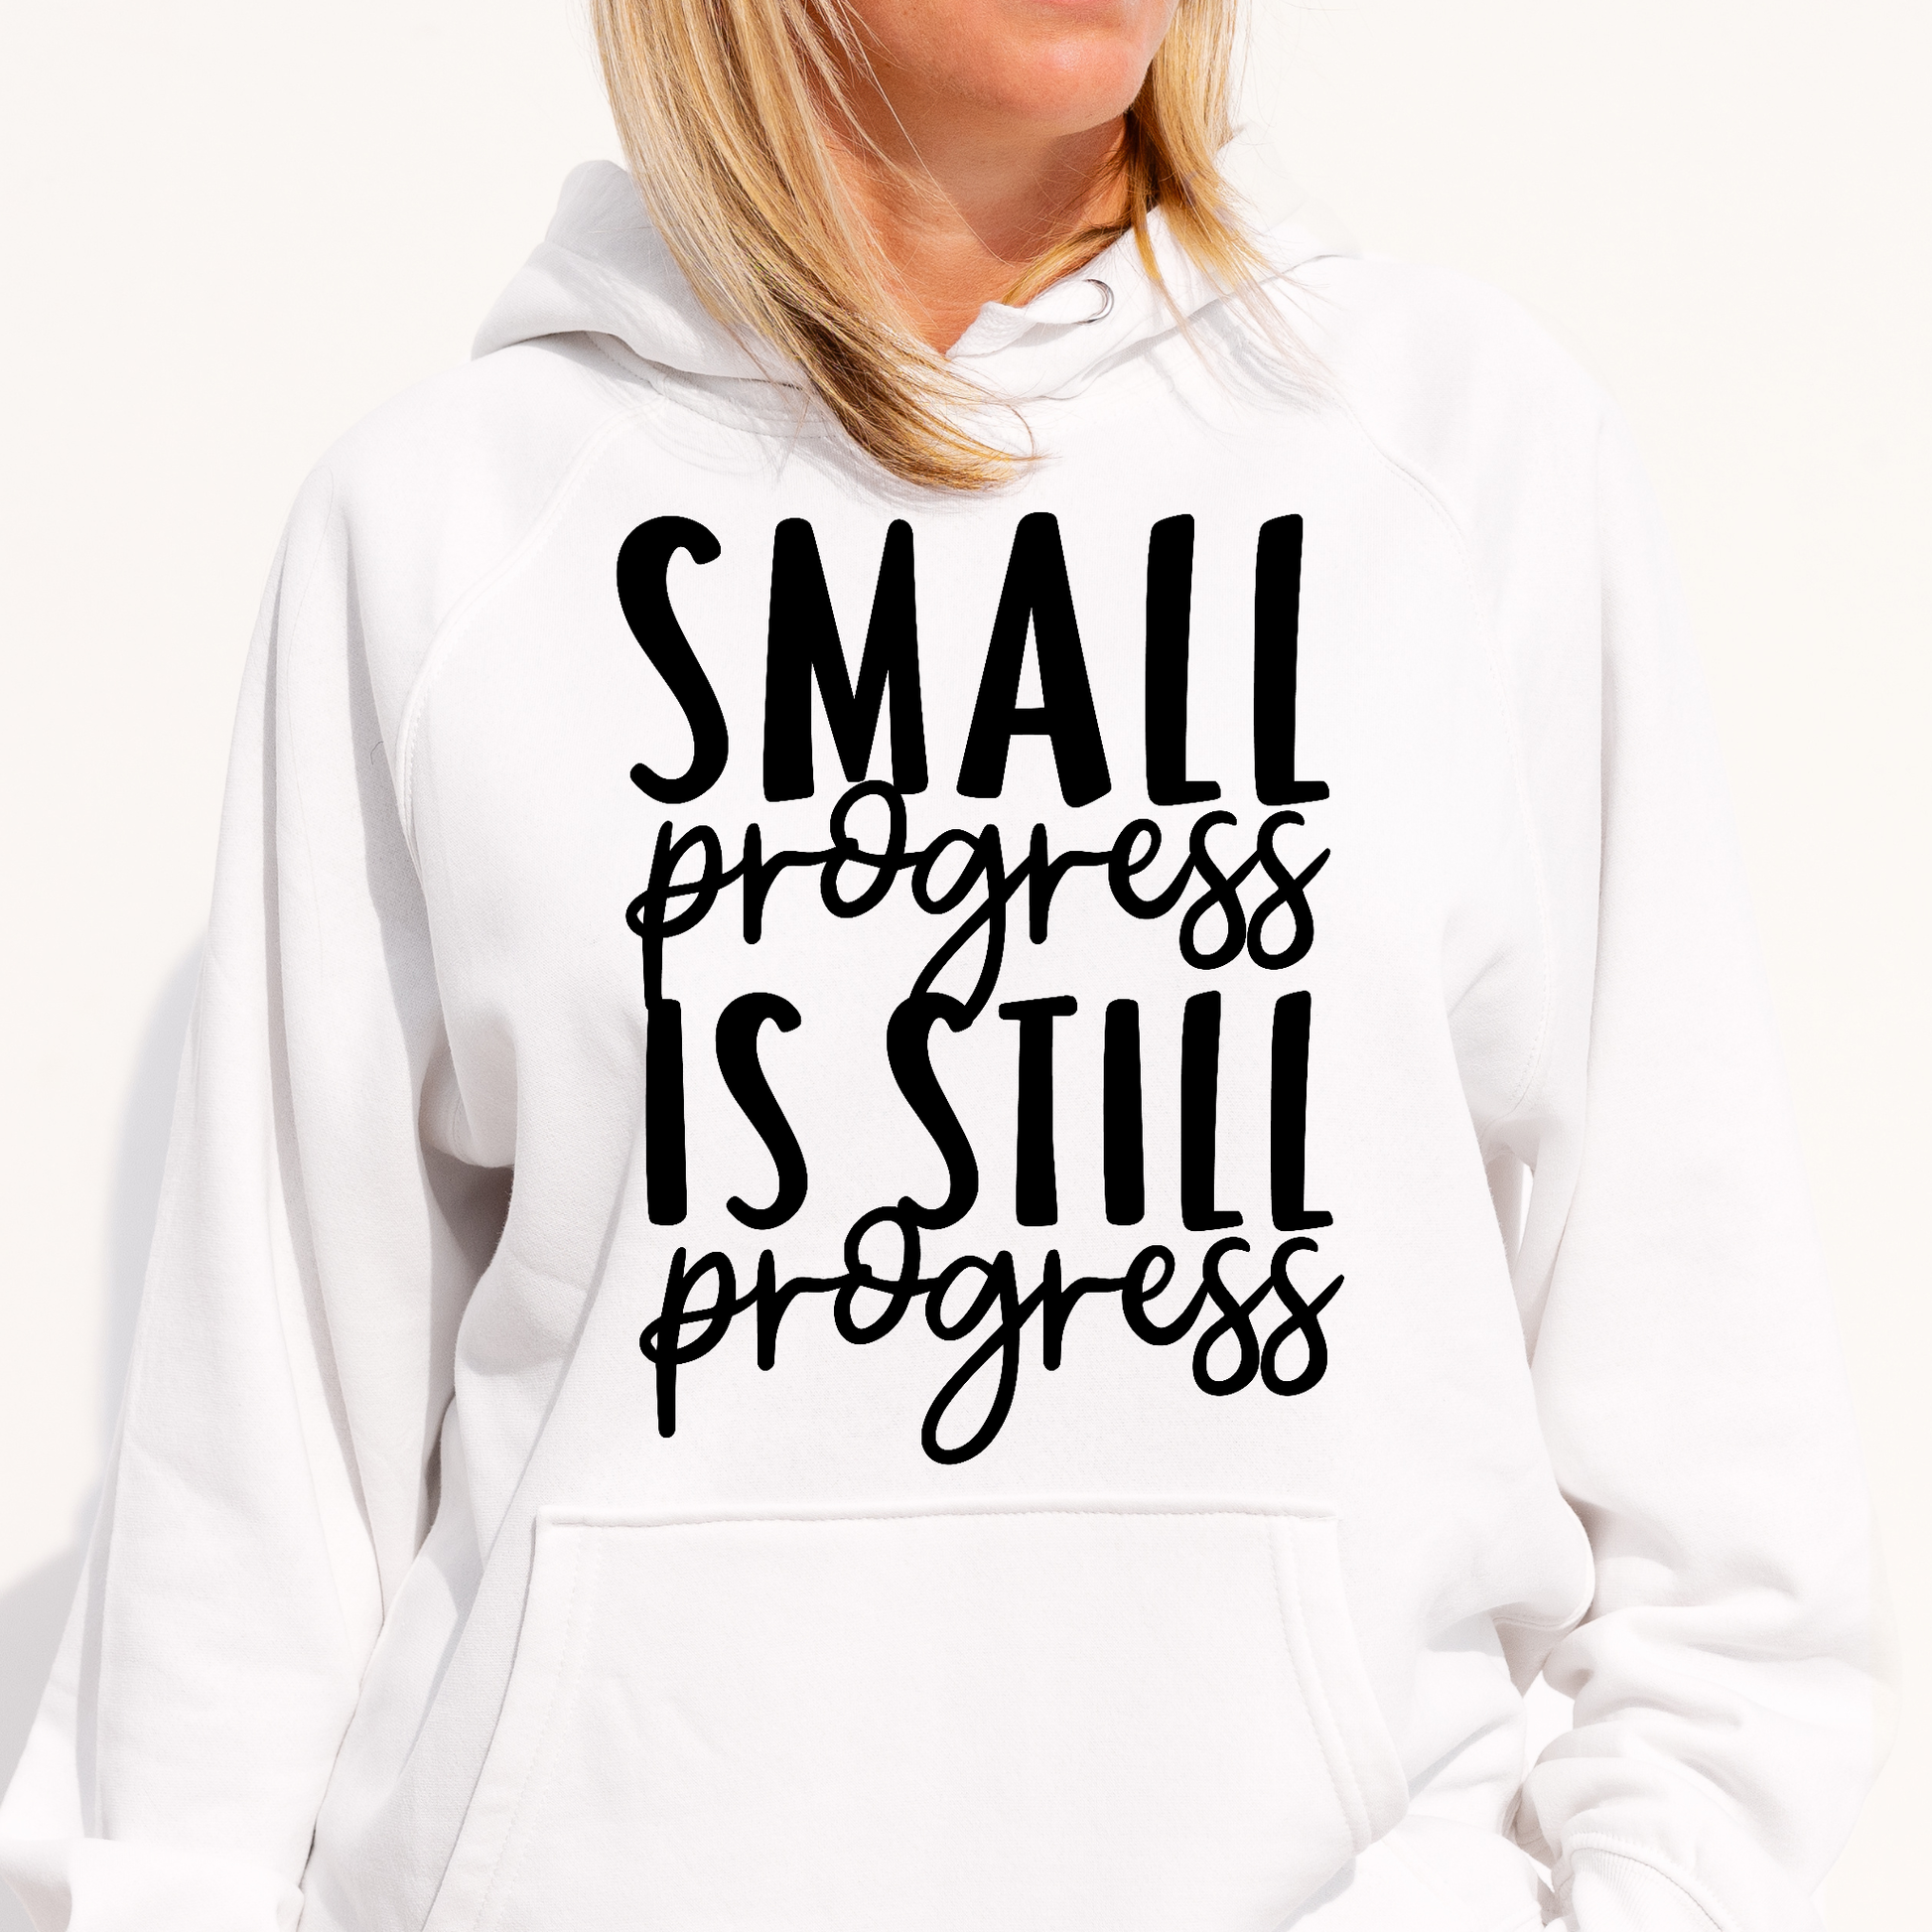 Small progress is stil progress Women's Hoodie - Premium t-shirt from Lees Krazy Teez - Just $39.95! Shop now at Lees Krazy Teez